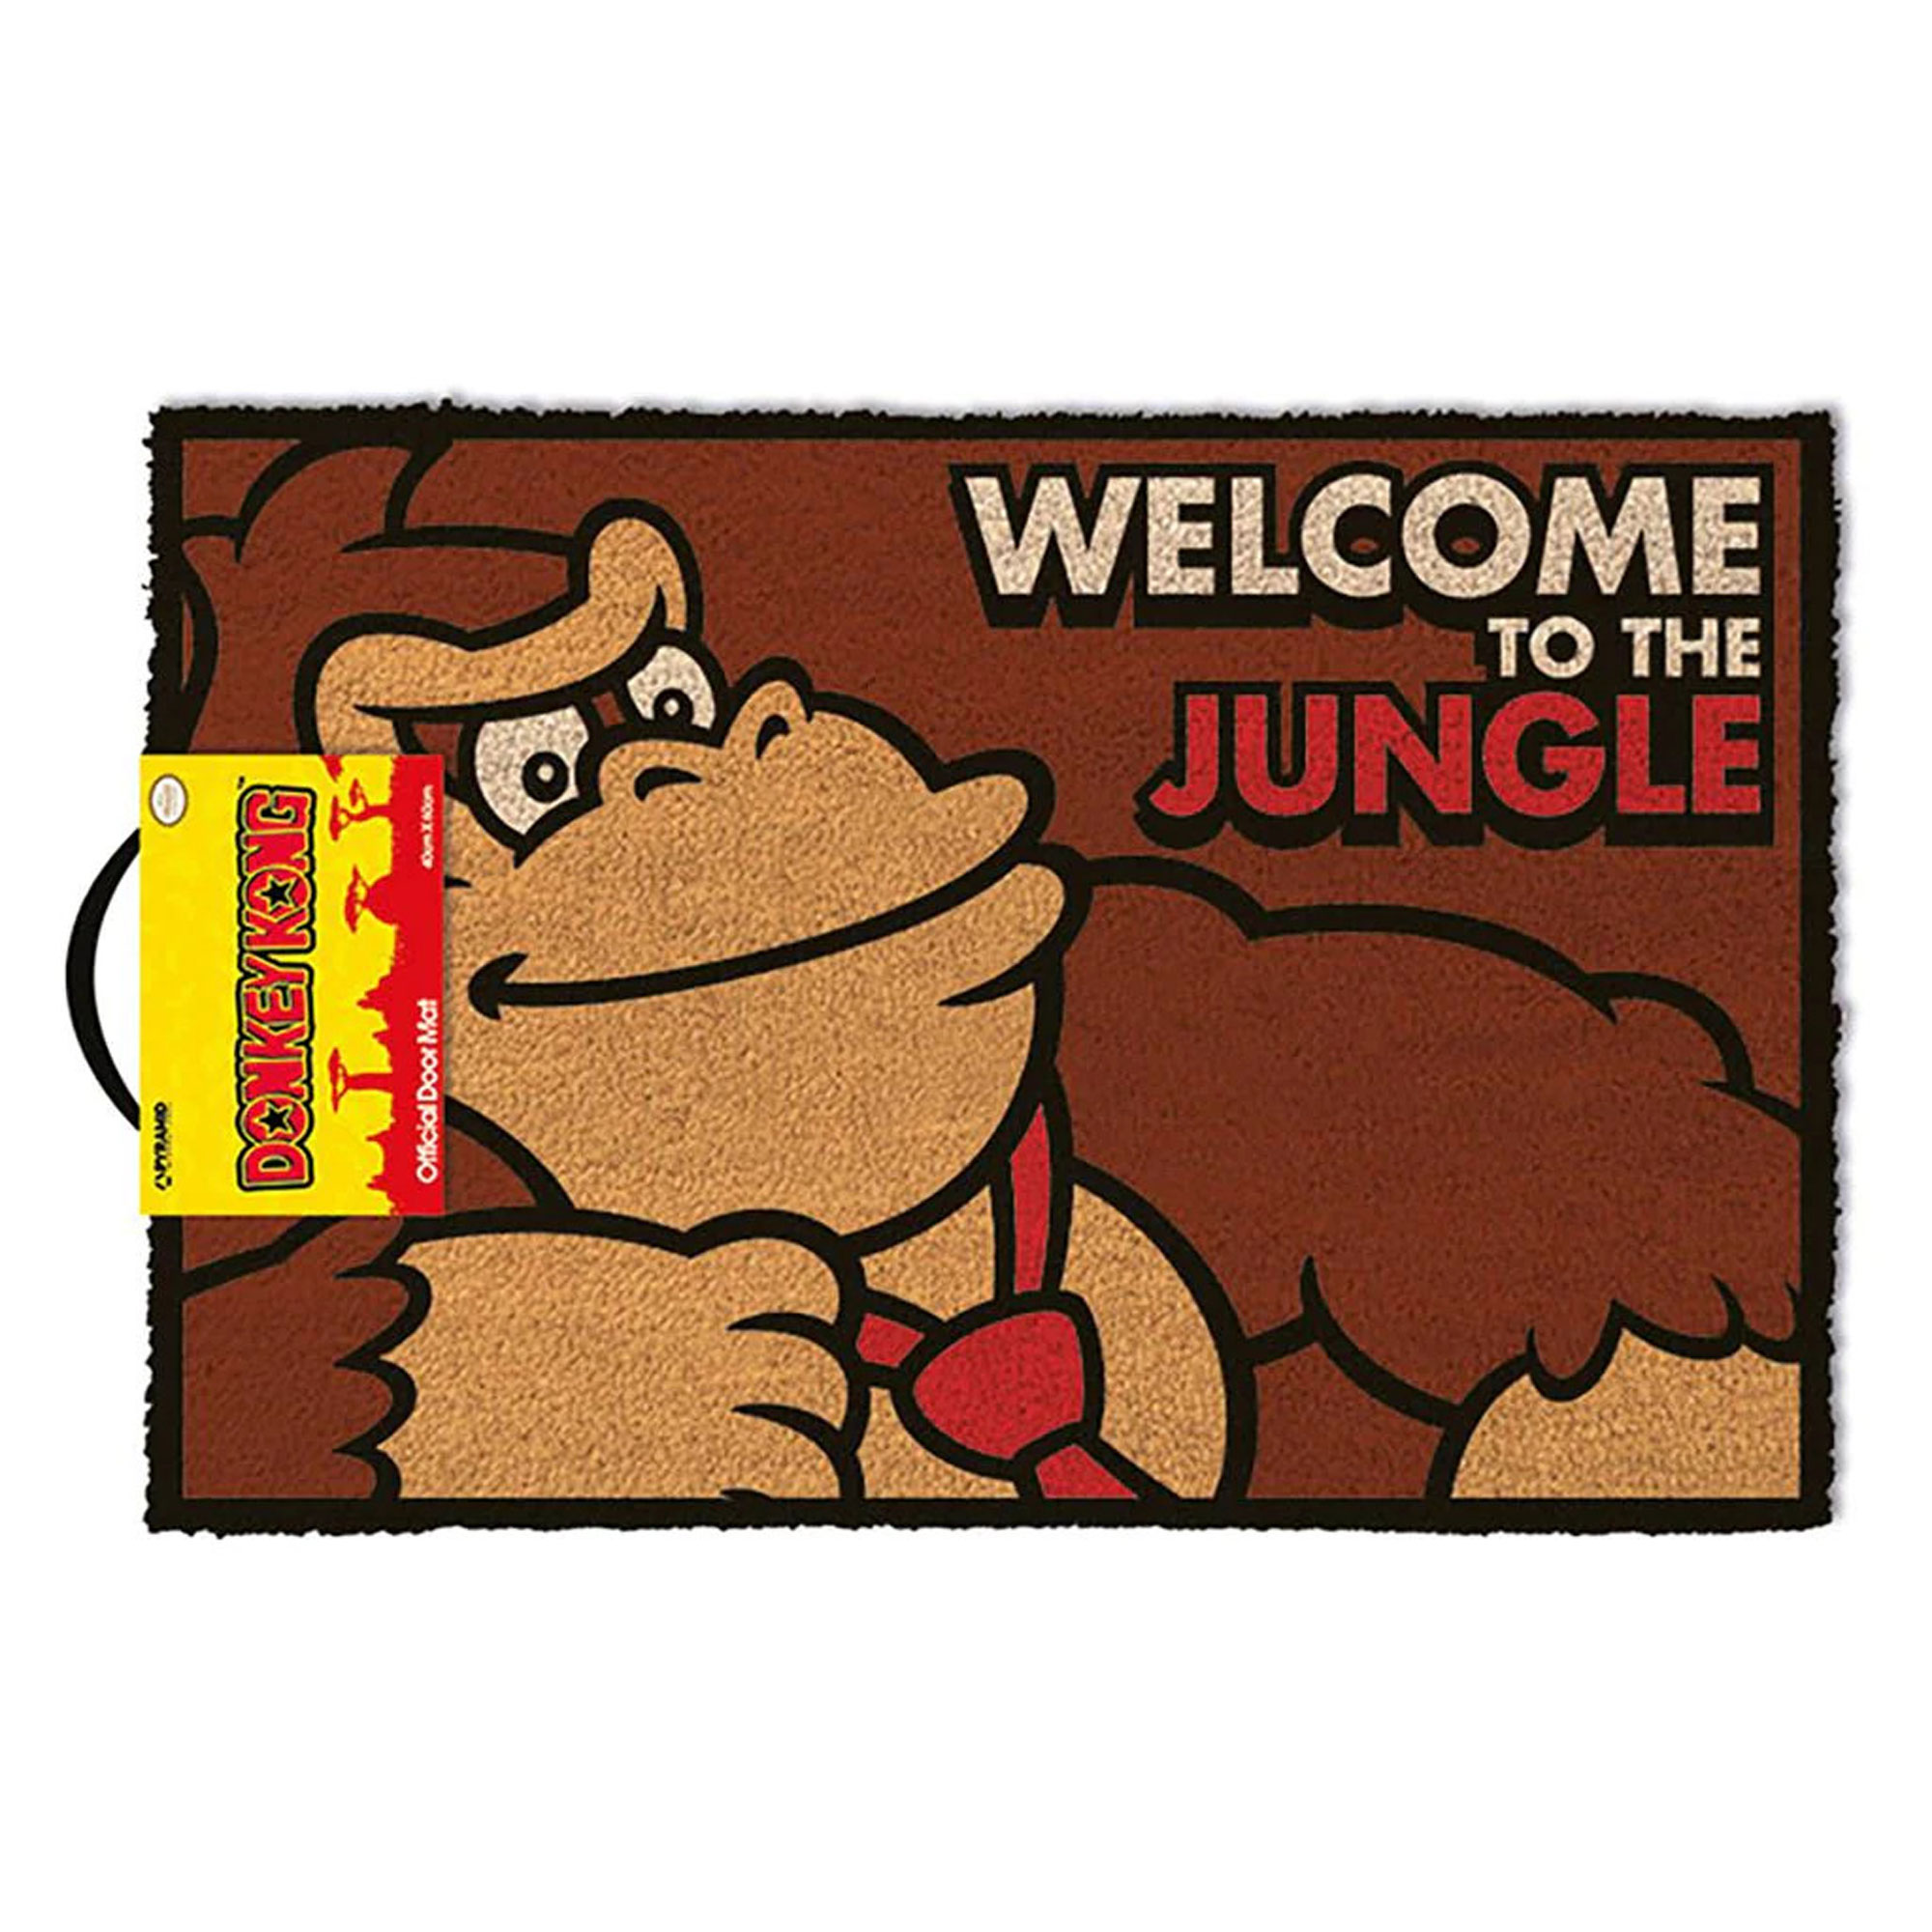 The Welcome Kong Jungle Kokos - Fußmatte - To Donkey